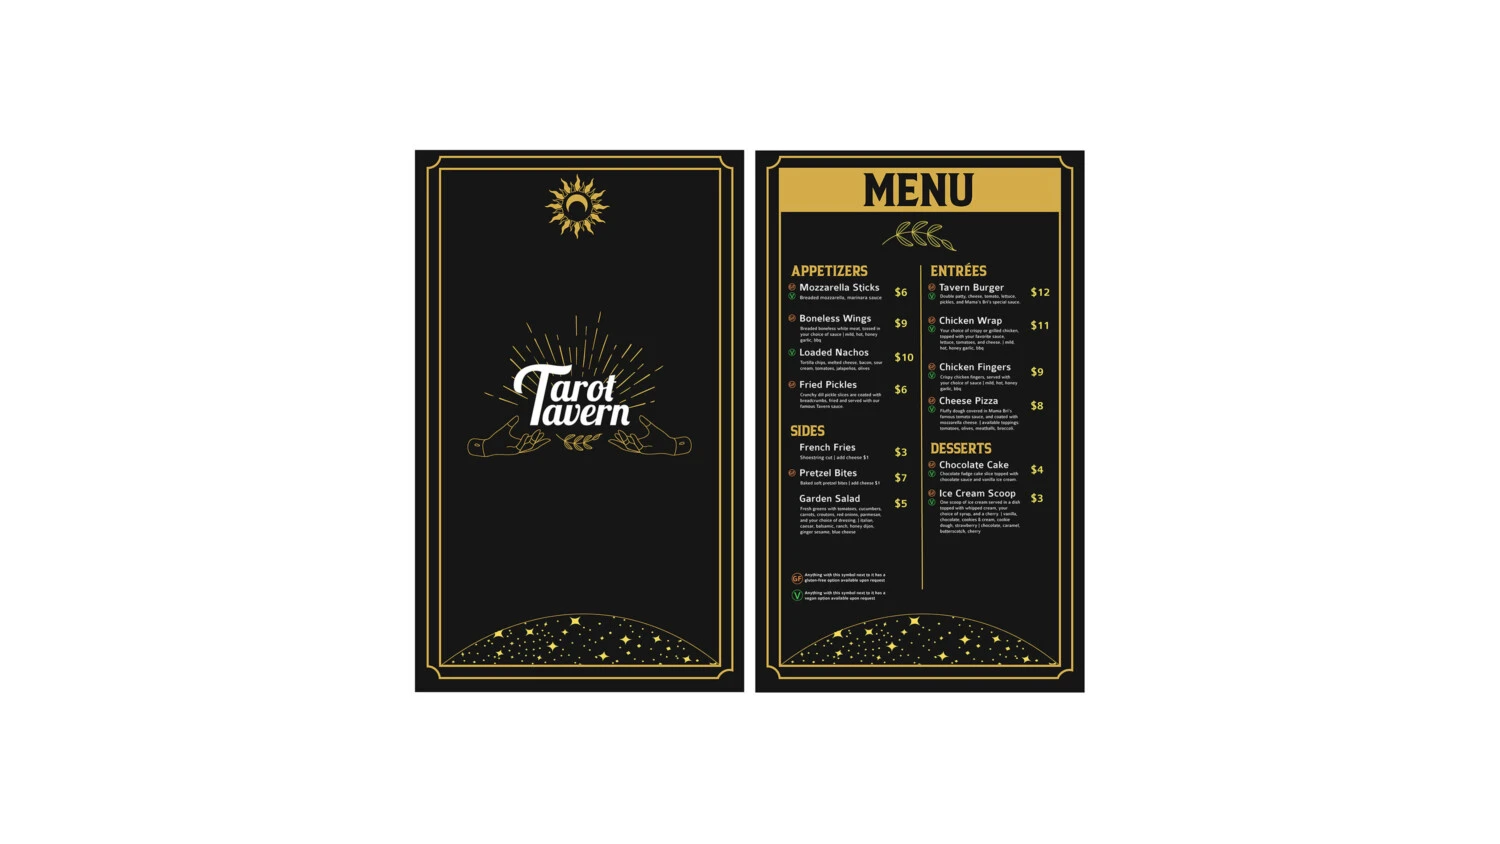 A food menu from the Tarot Tavern by Perri Schlosser '22.